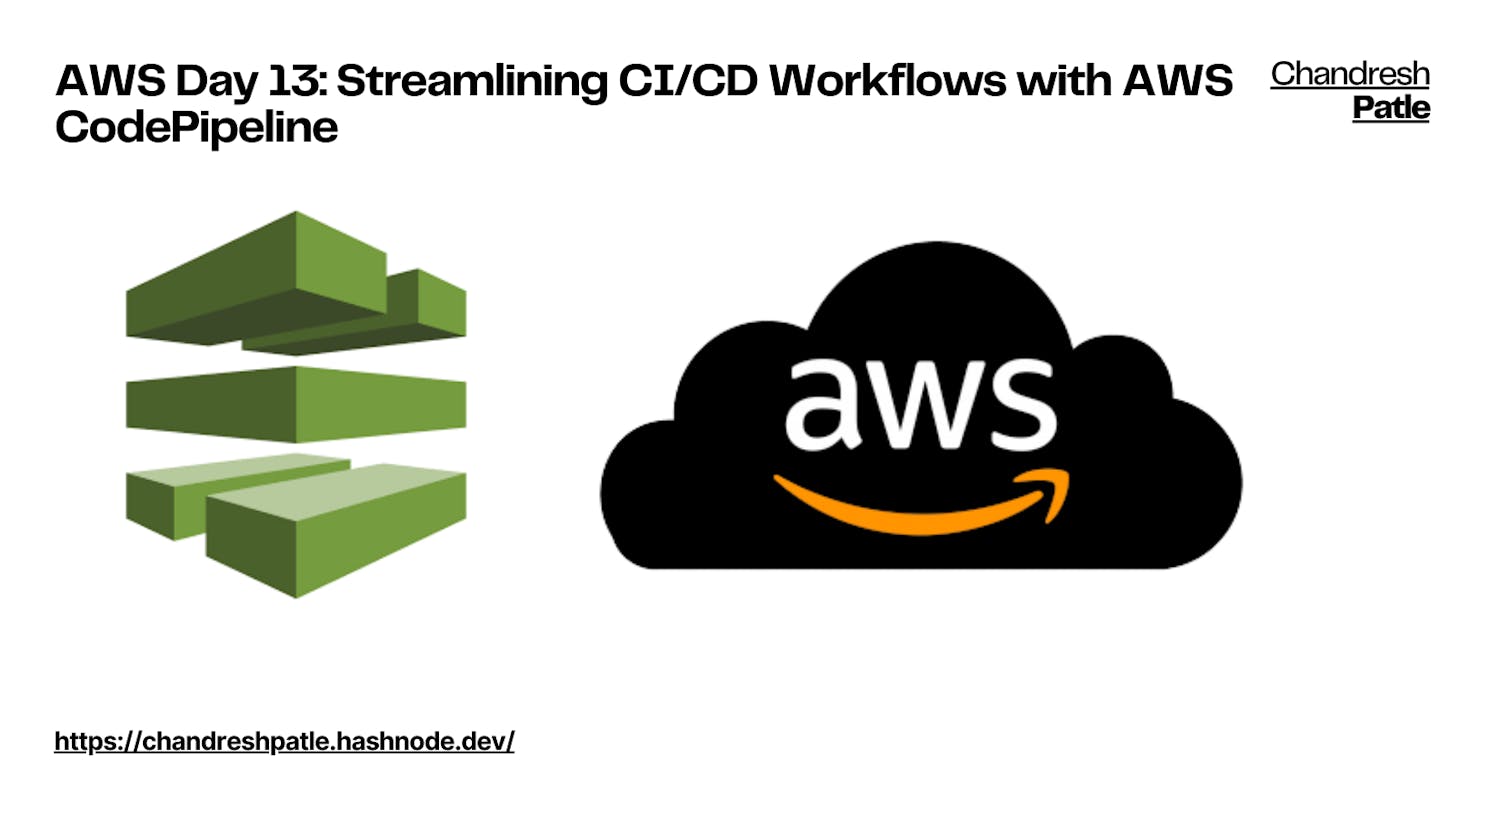 AWS Day 13: Streamlining CI/CD Workflows with AWS CodePipeline